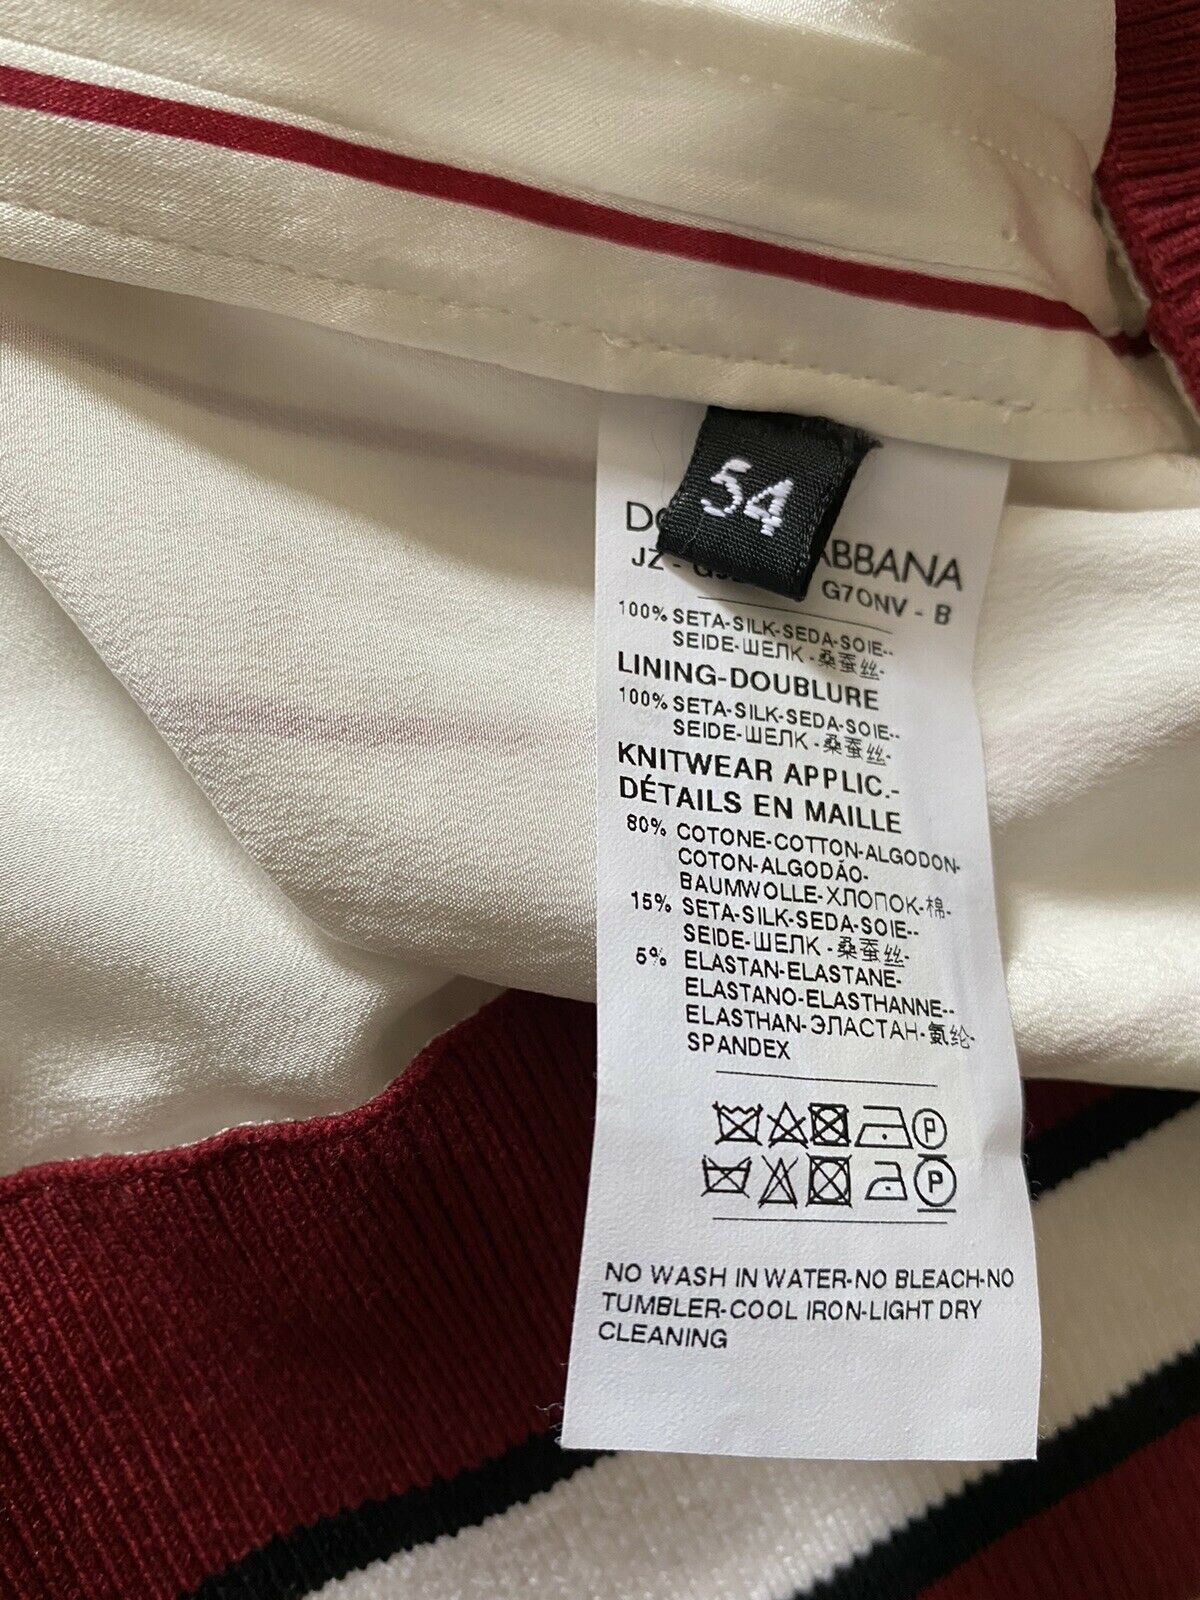 New $1195 Dolce&Gabbana DG Monogram Pullover T Shirt Red/While XL ( 54 Eu )